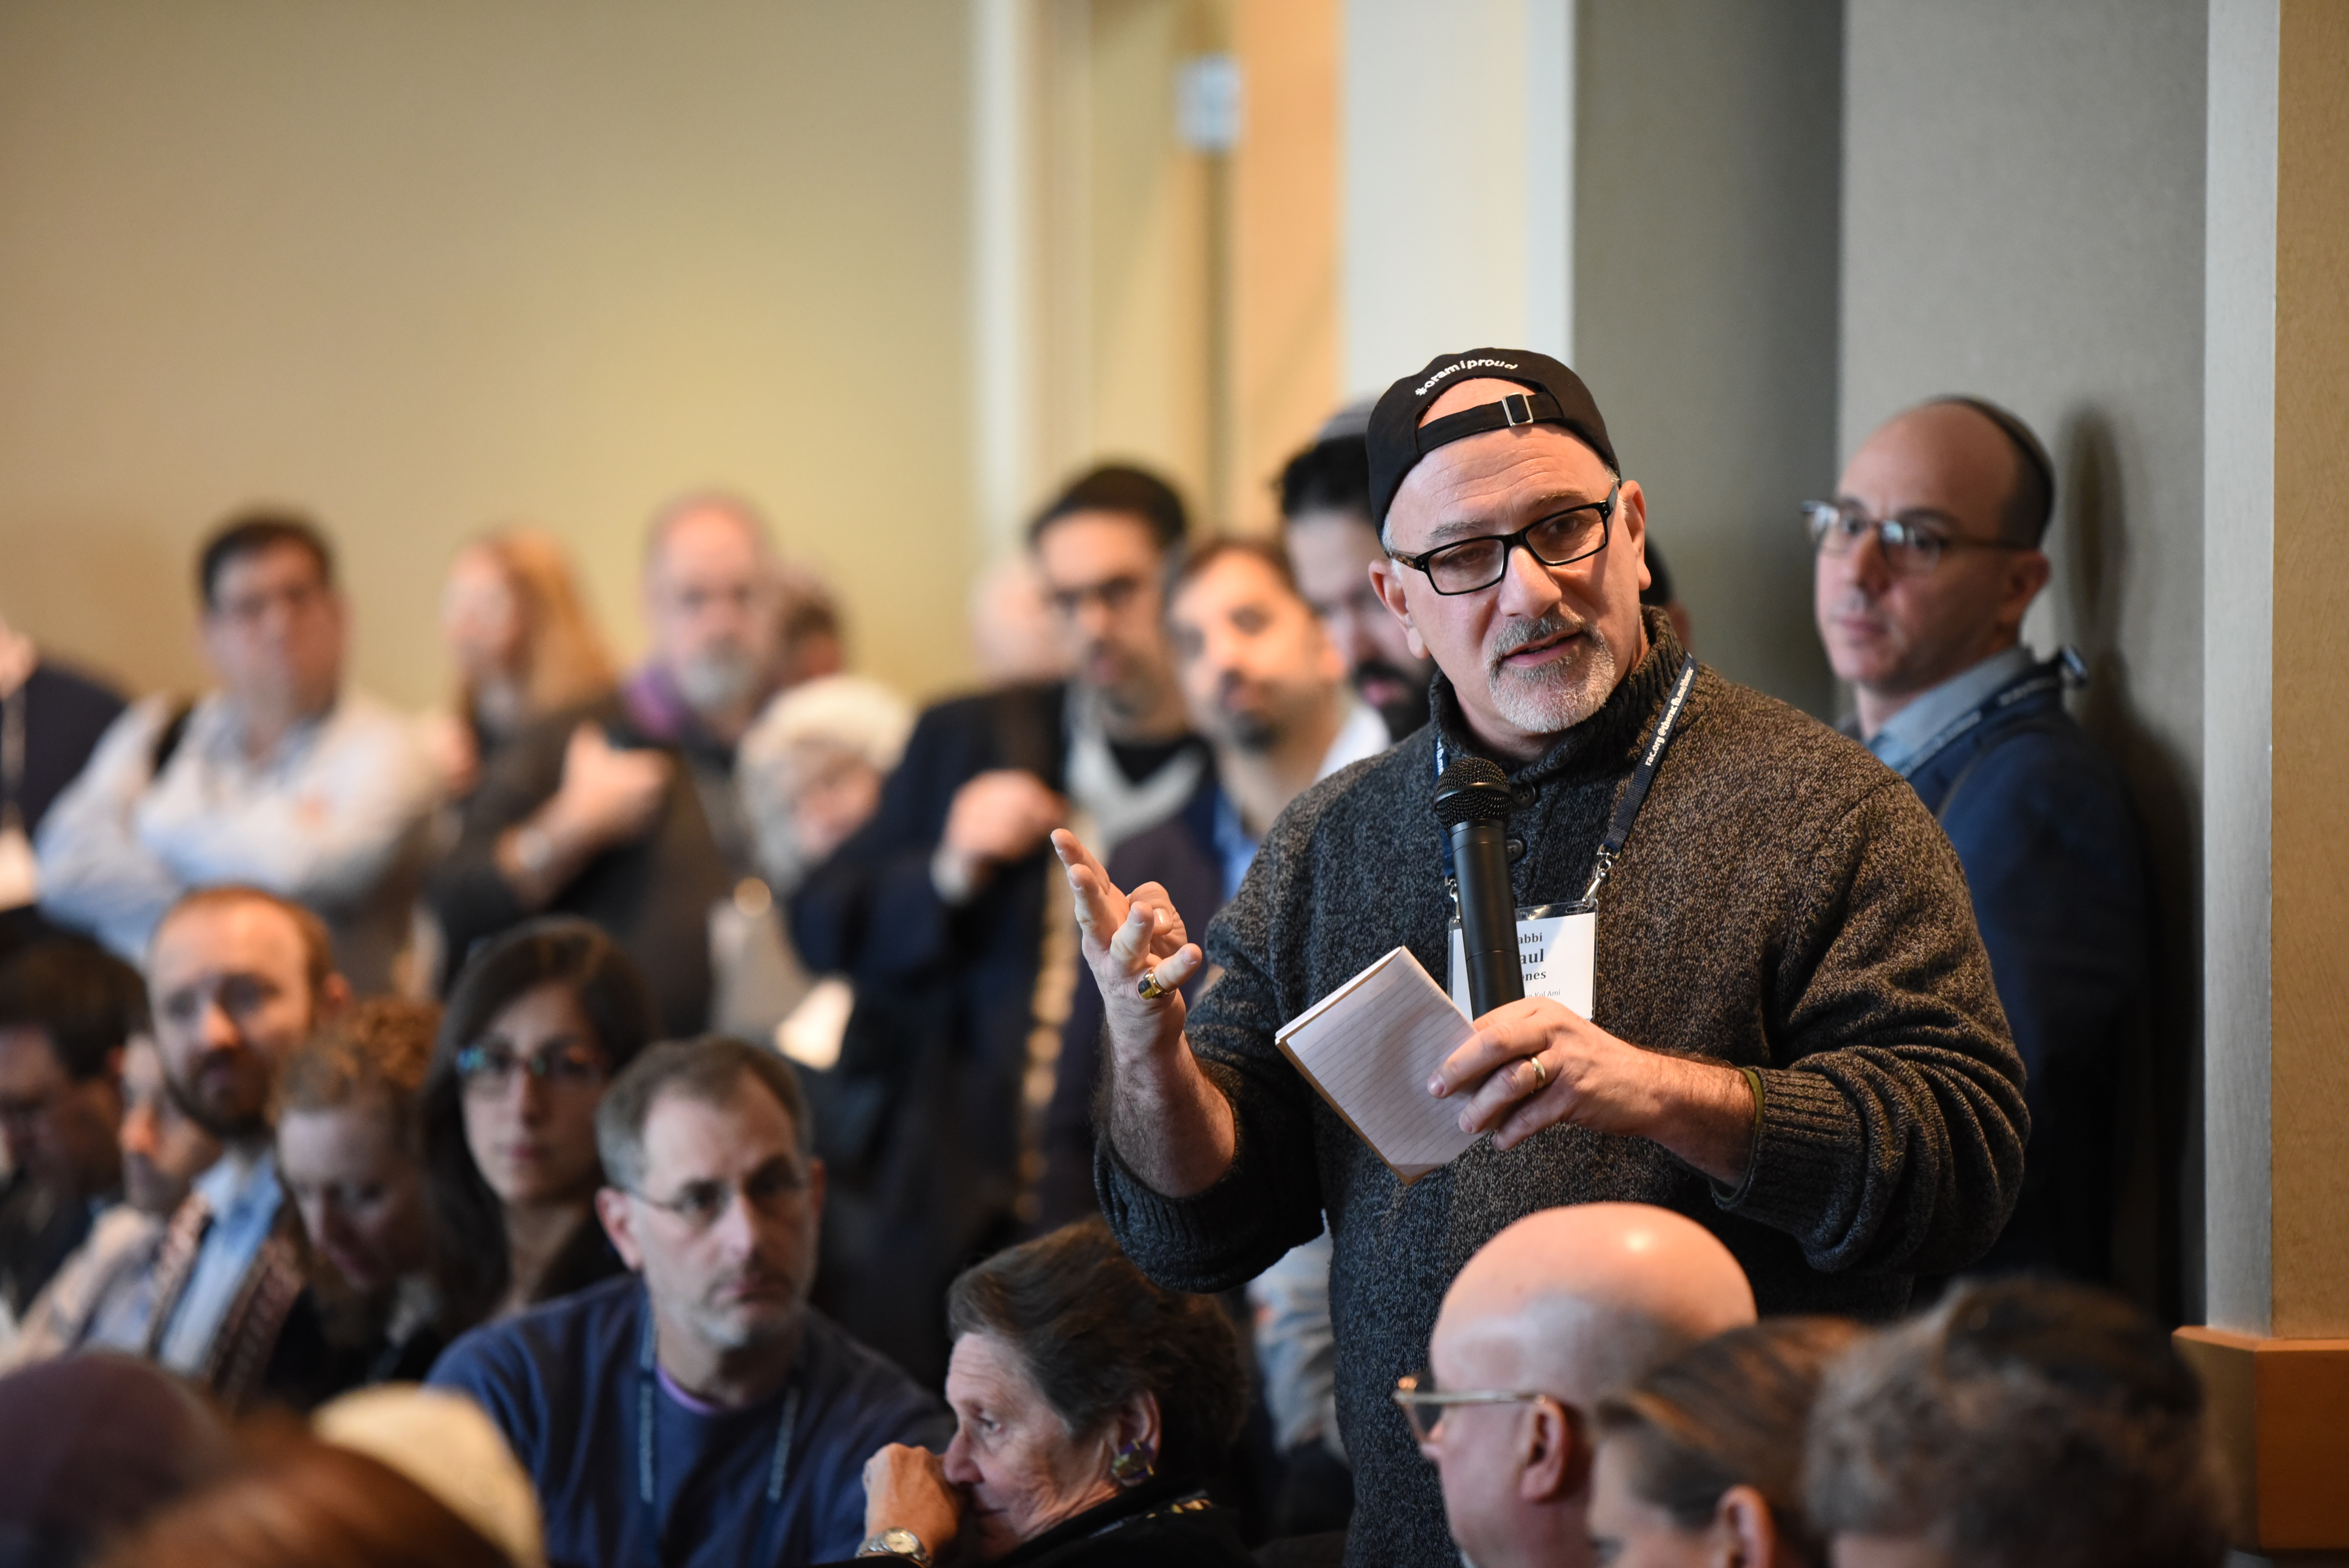 Rabbi Paul Kipnes speaks at the Rabbinic Moral Leadership Gathering